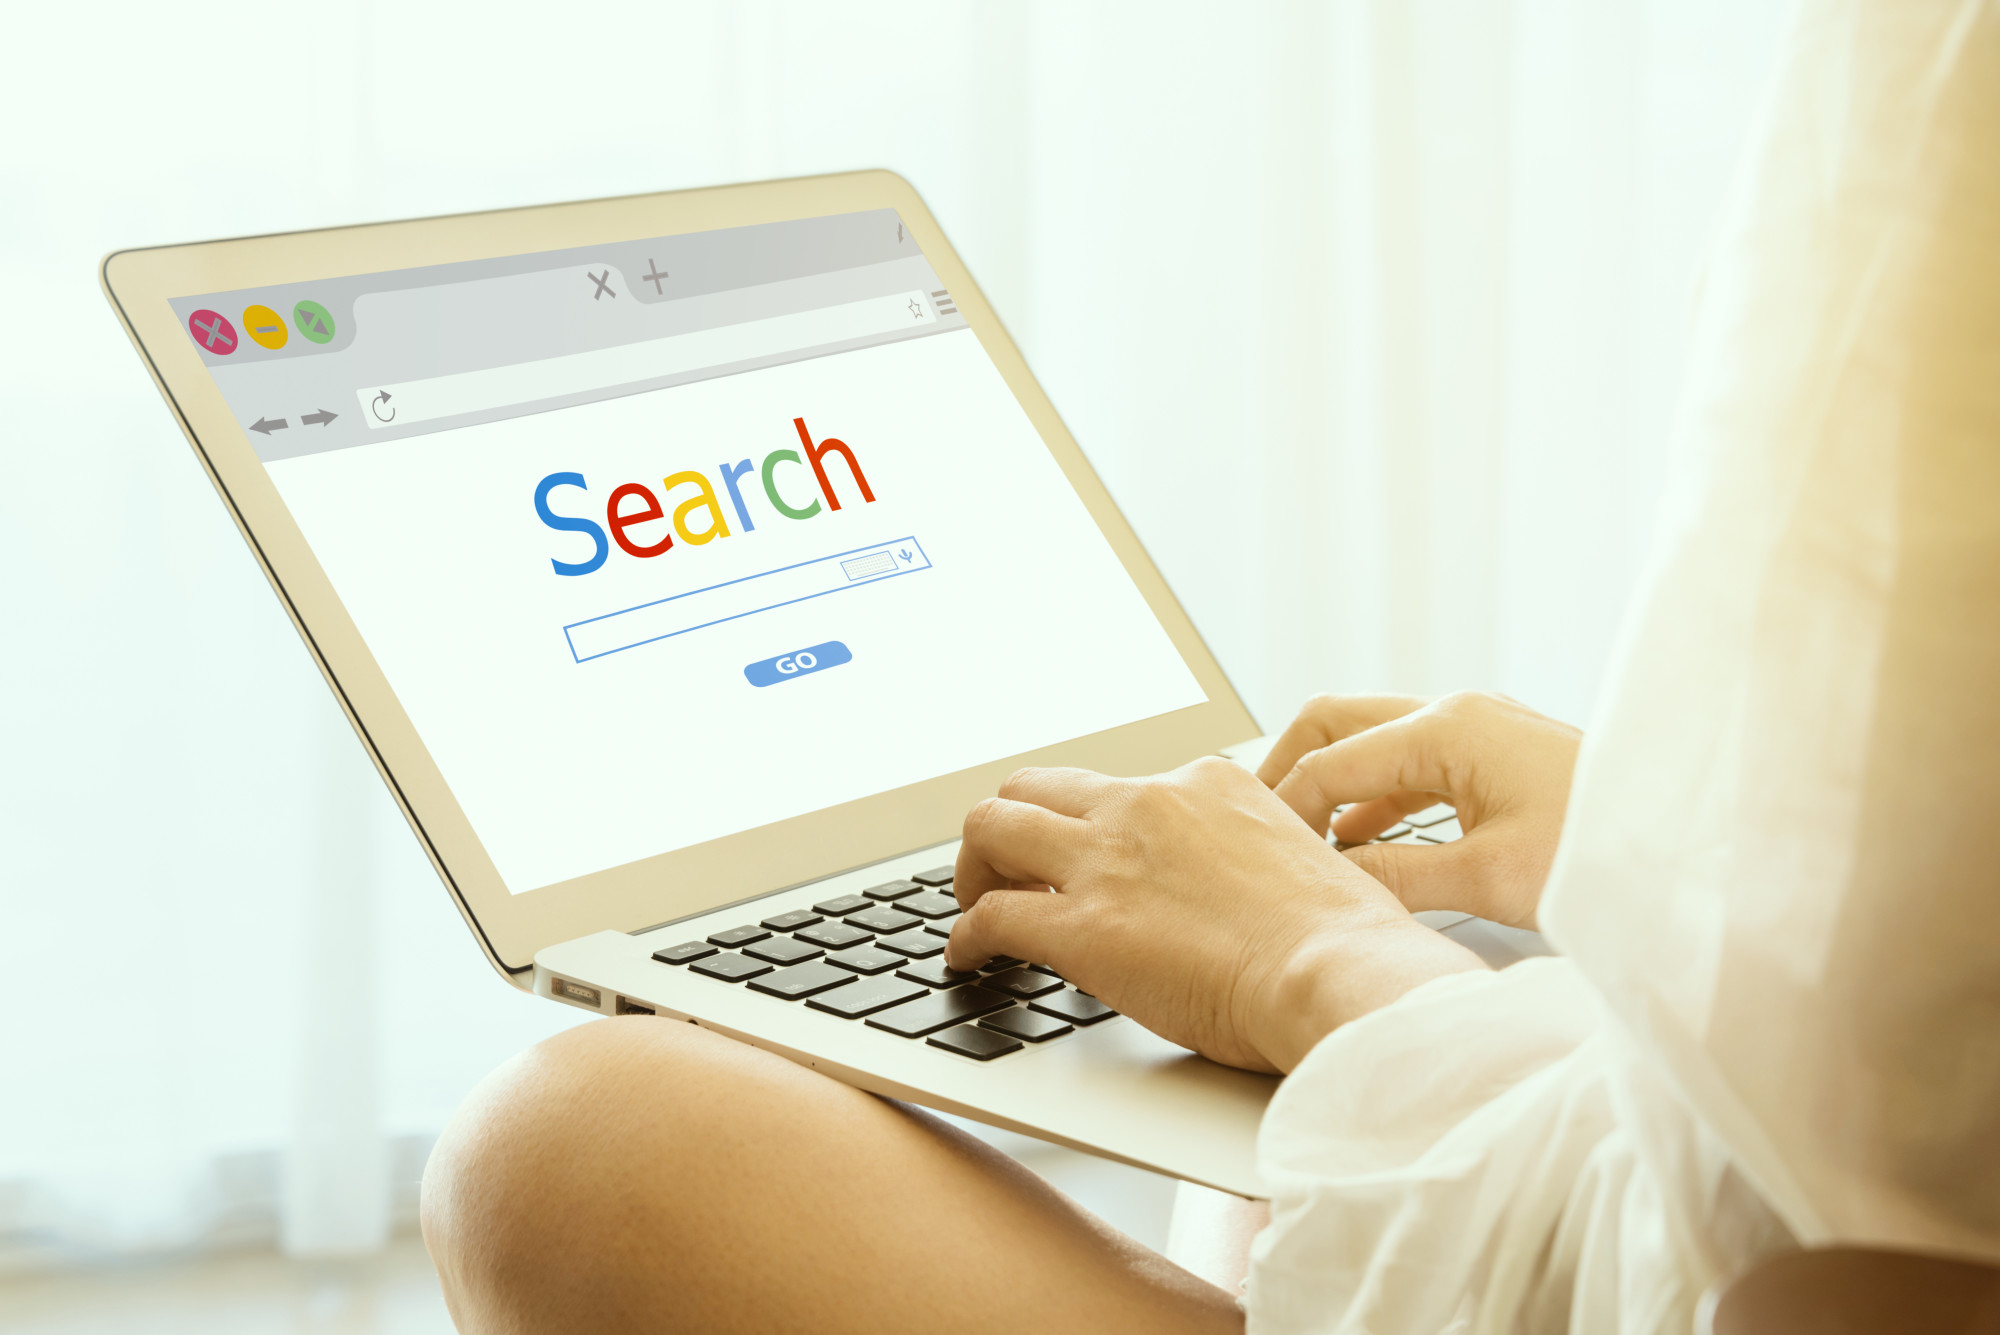 google search on laptop